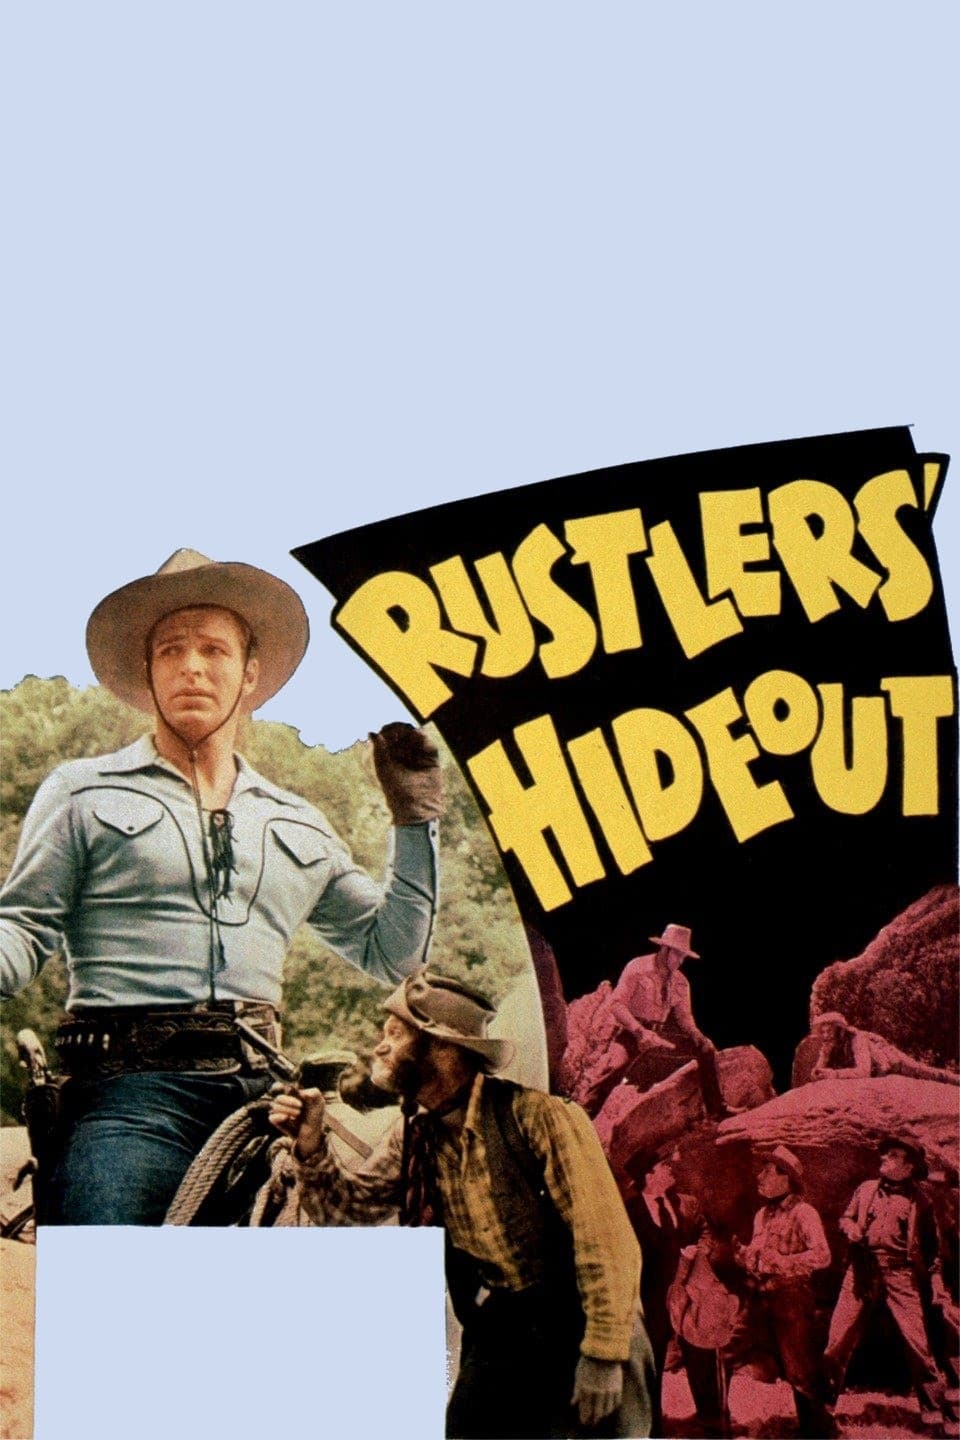 Rustlers' Hideout (1945)